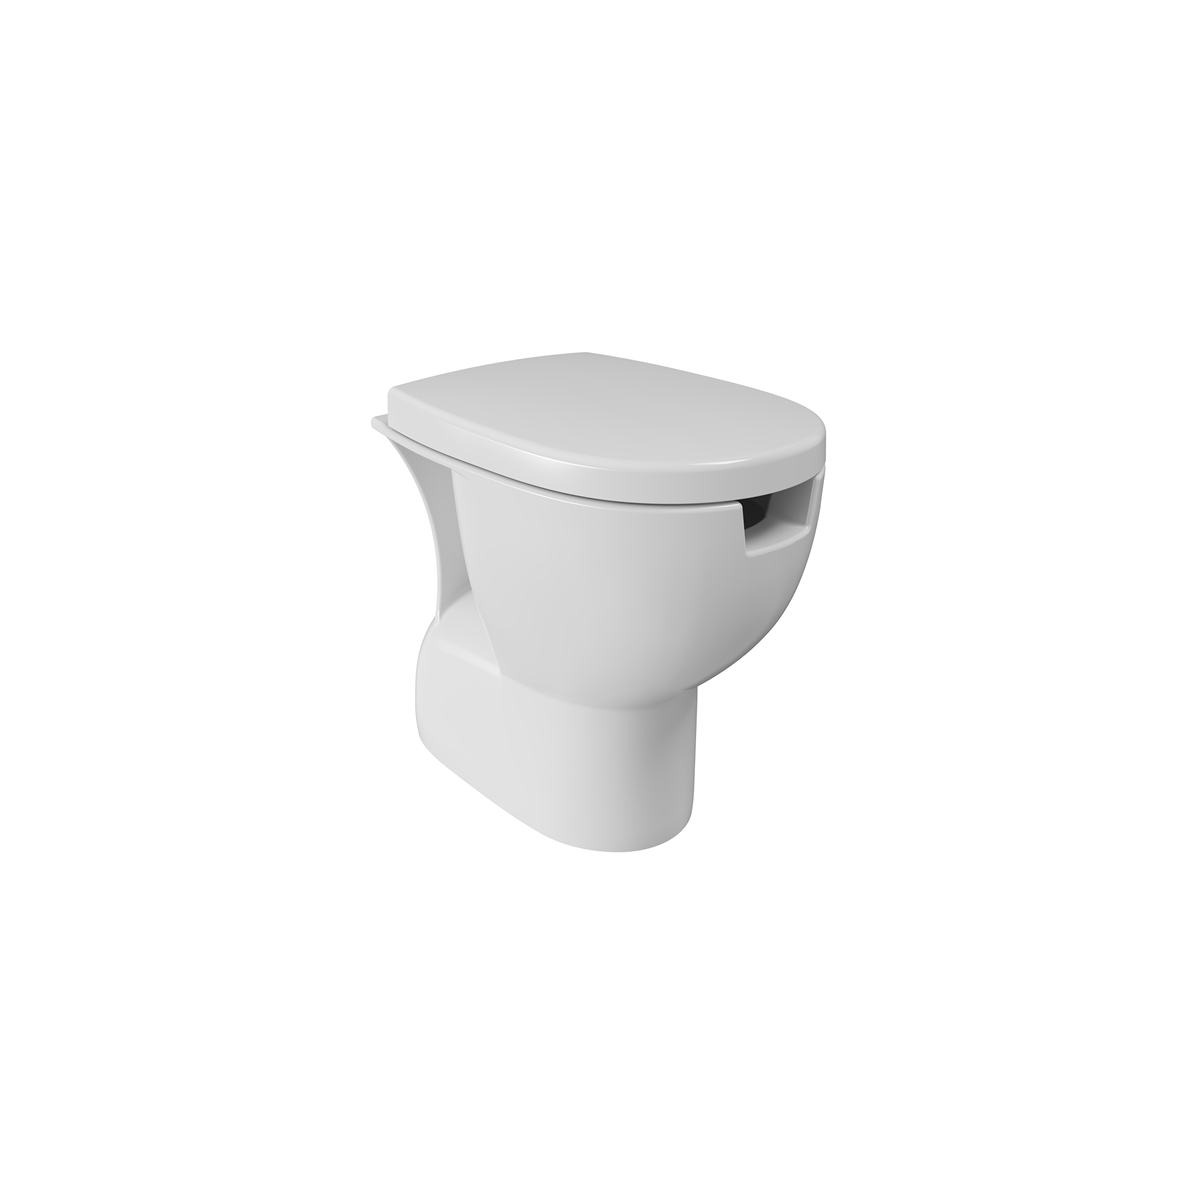 Parma Rimless Single Toilet with Concealed Bidet Entry 1491-001-0128 -  BOCCHI Il Bagno Per Tutti